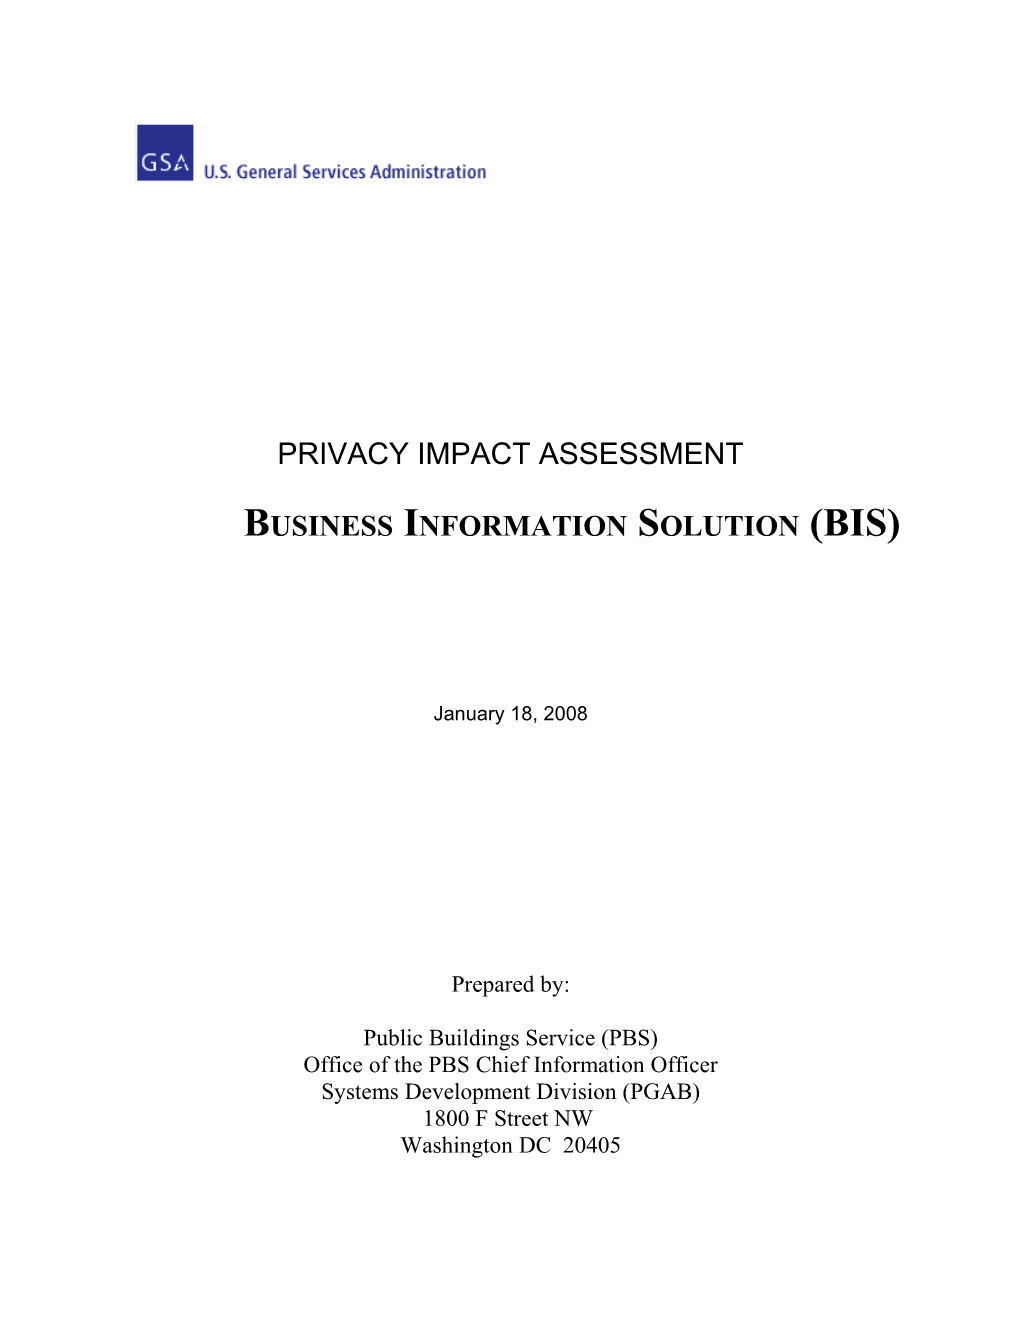 Business Information Solution (BIS)